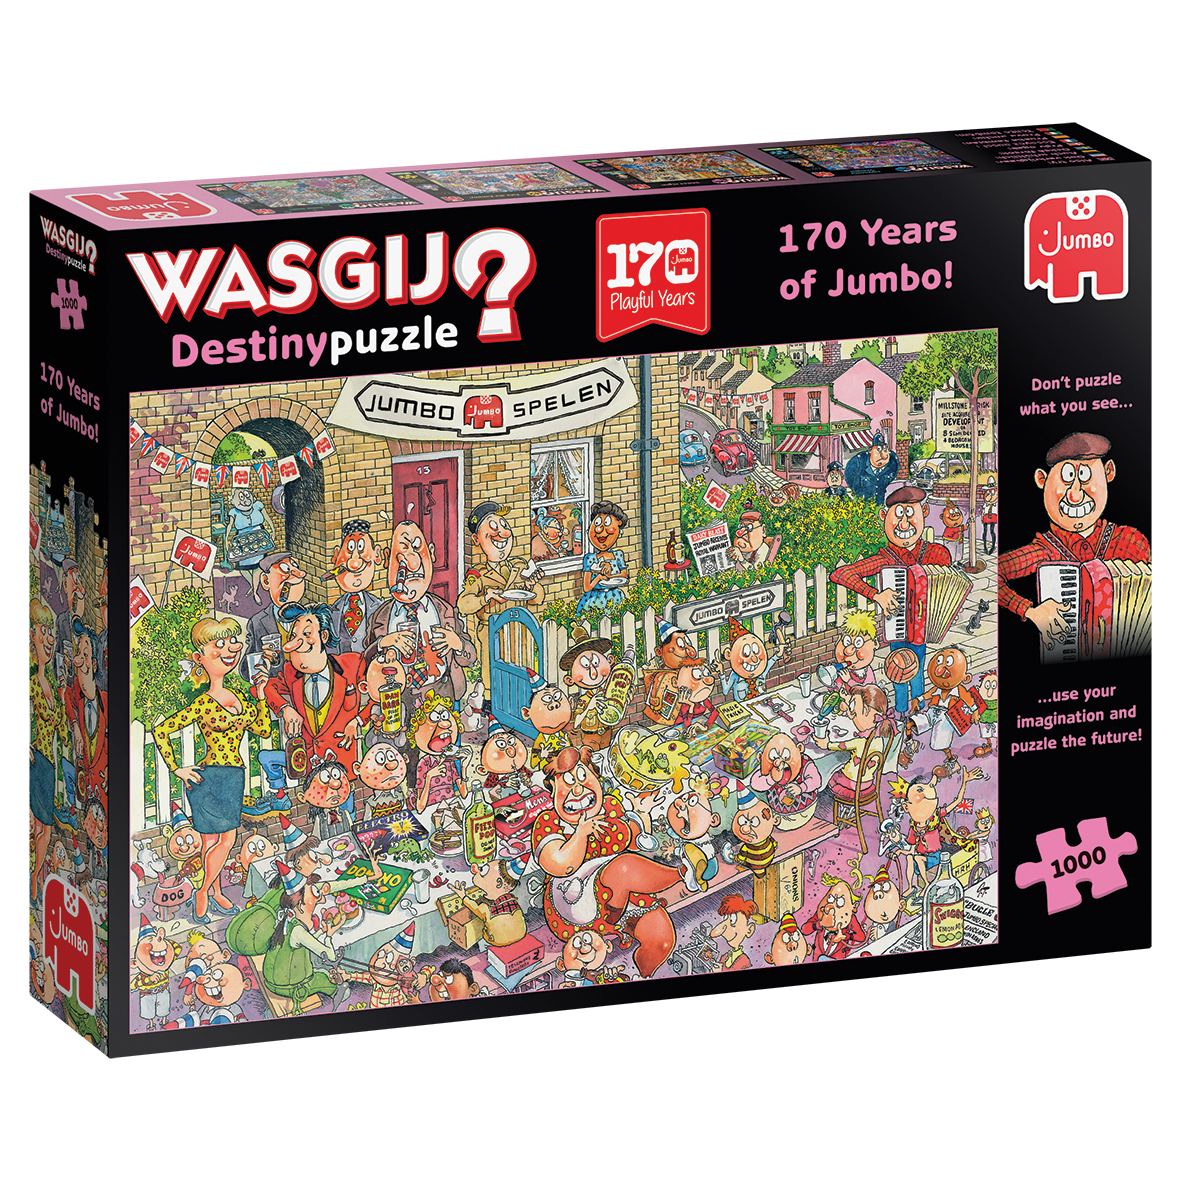 Wasgij Destiny 170 Years of Jumbo! 1000pcs - product image - Jumboplay.com